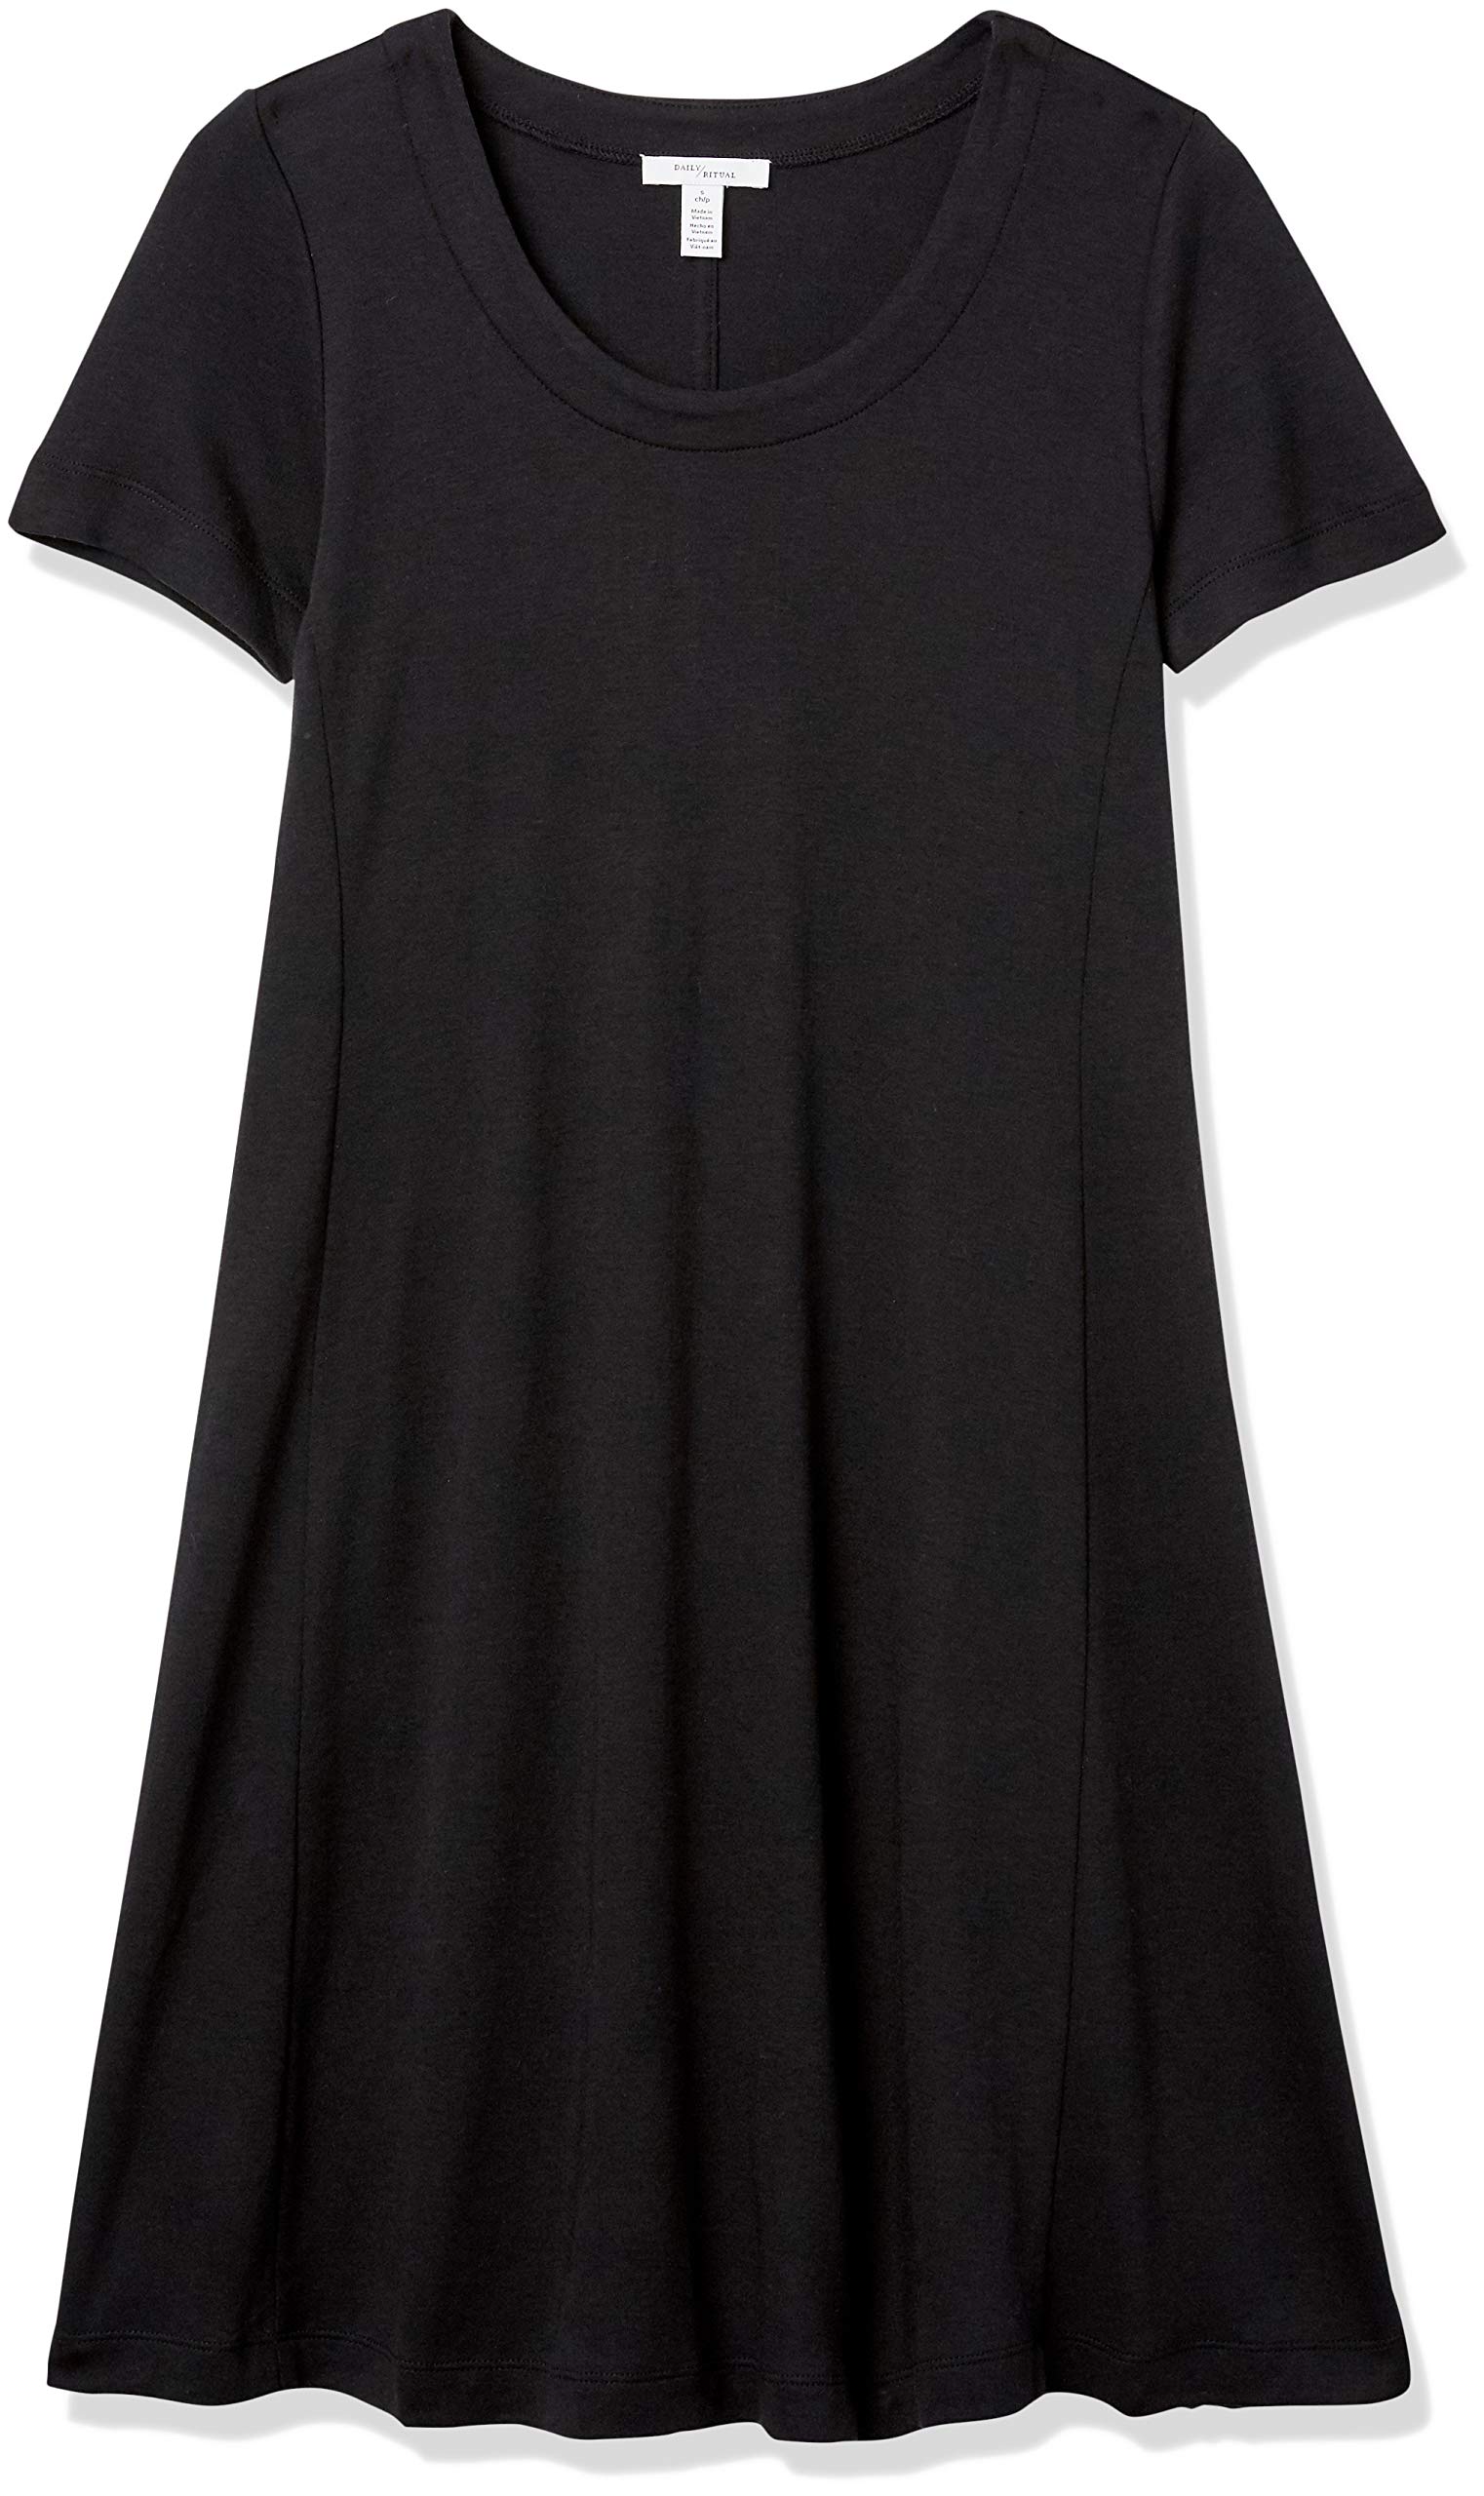 Daily Ritual Women's Short-Sleeve Scoop Neck Dress